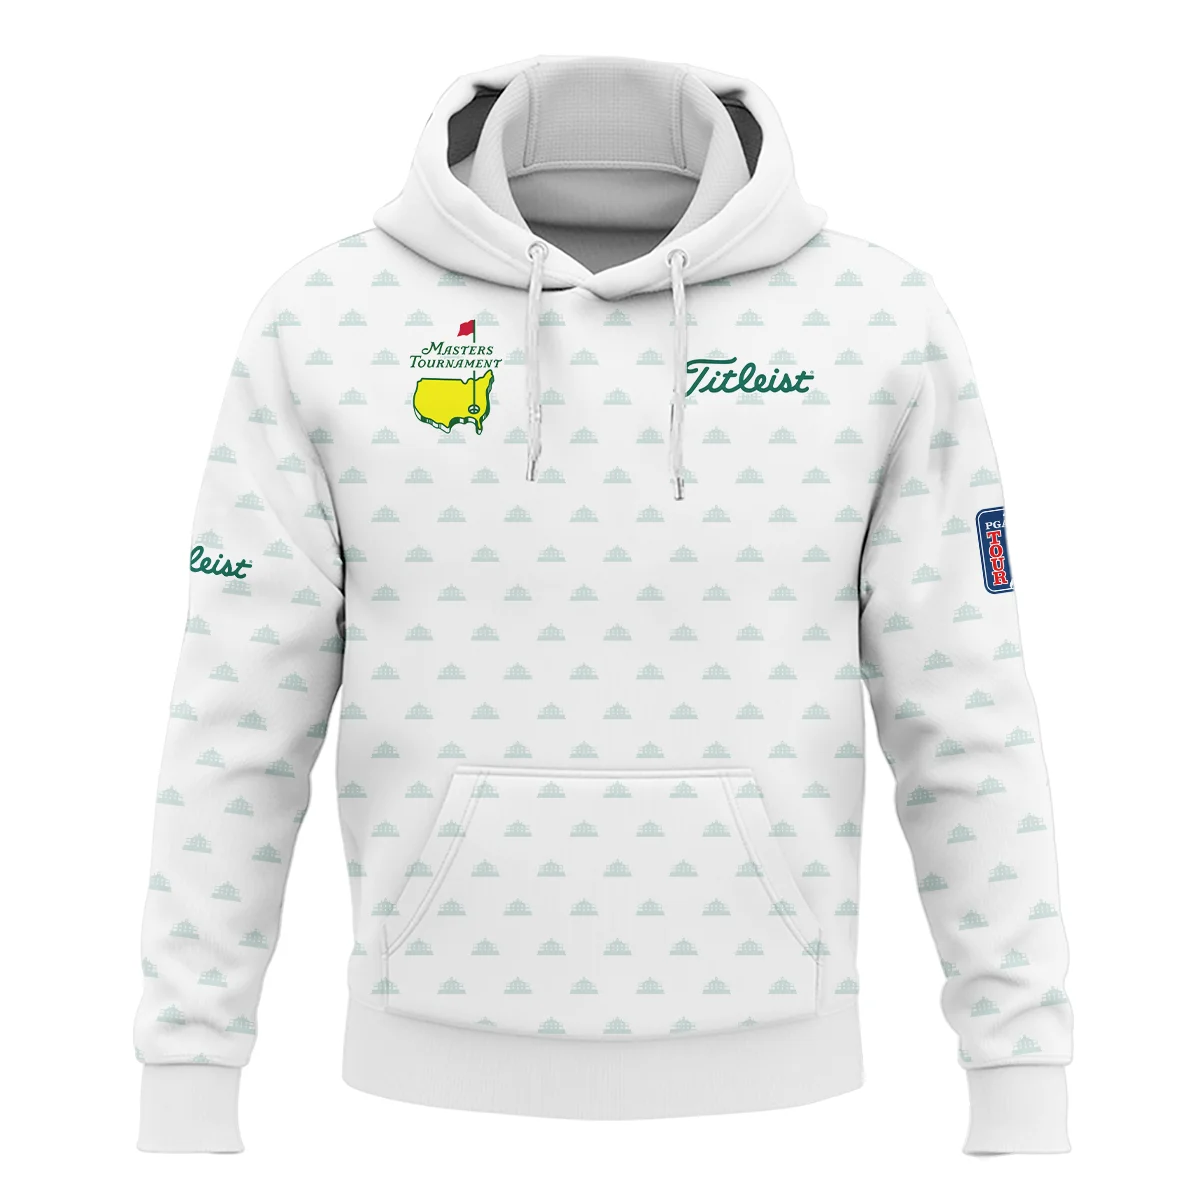 Masters Tournament Golf Sport Titleist Quarter-Zip Jacket Sports Cup Pattern White Green Quarter-Zip Jacket